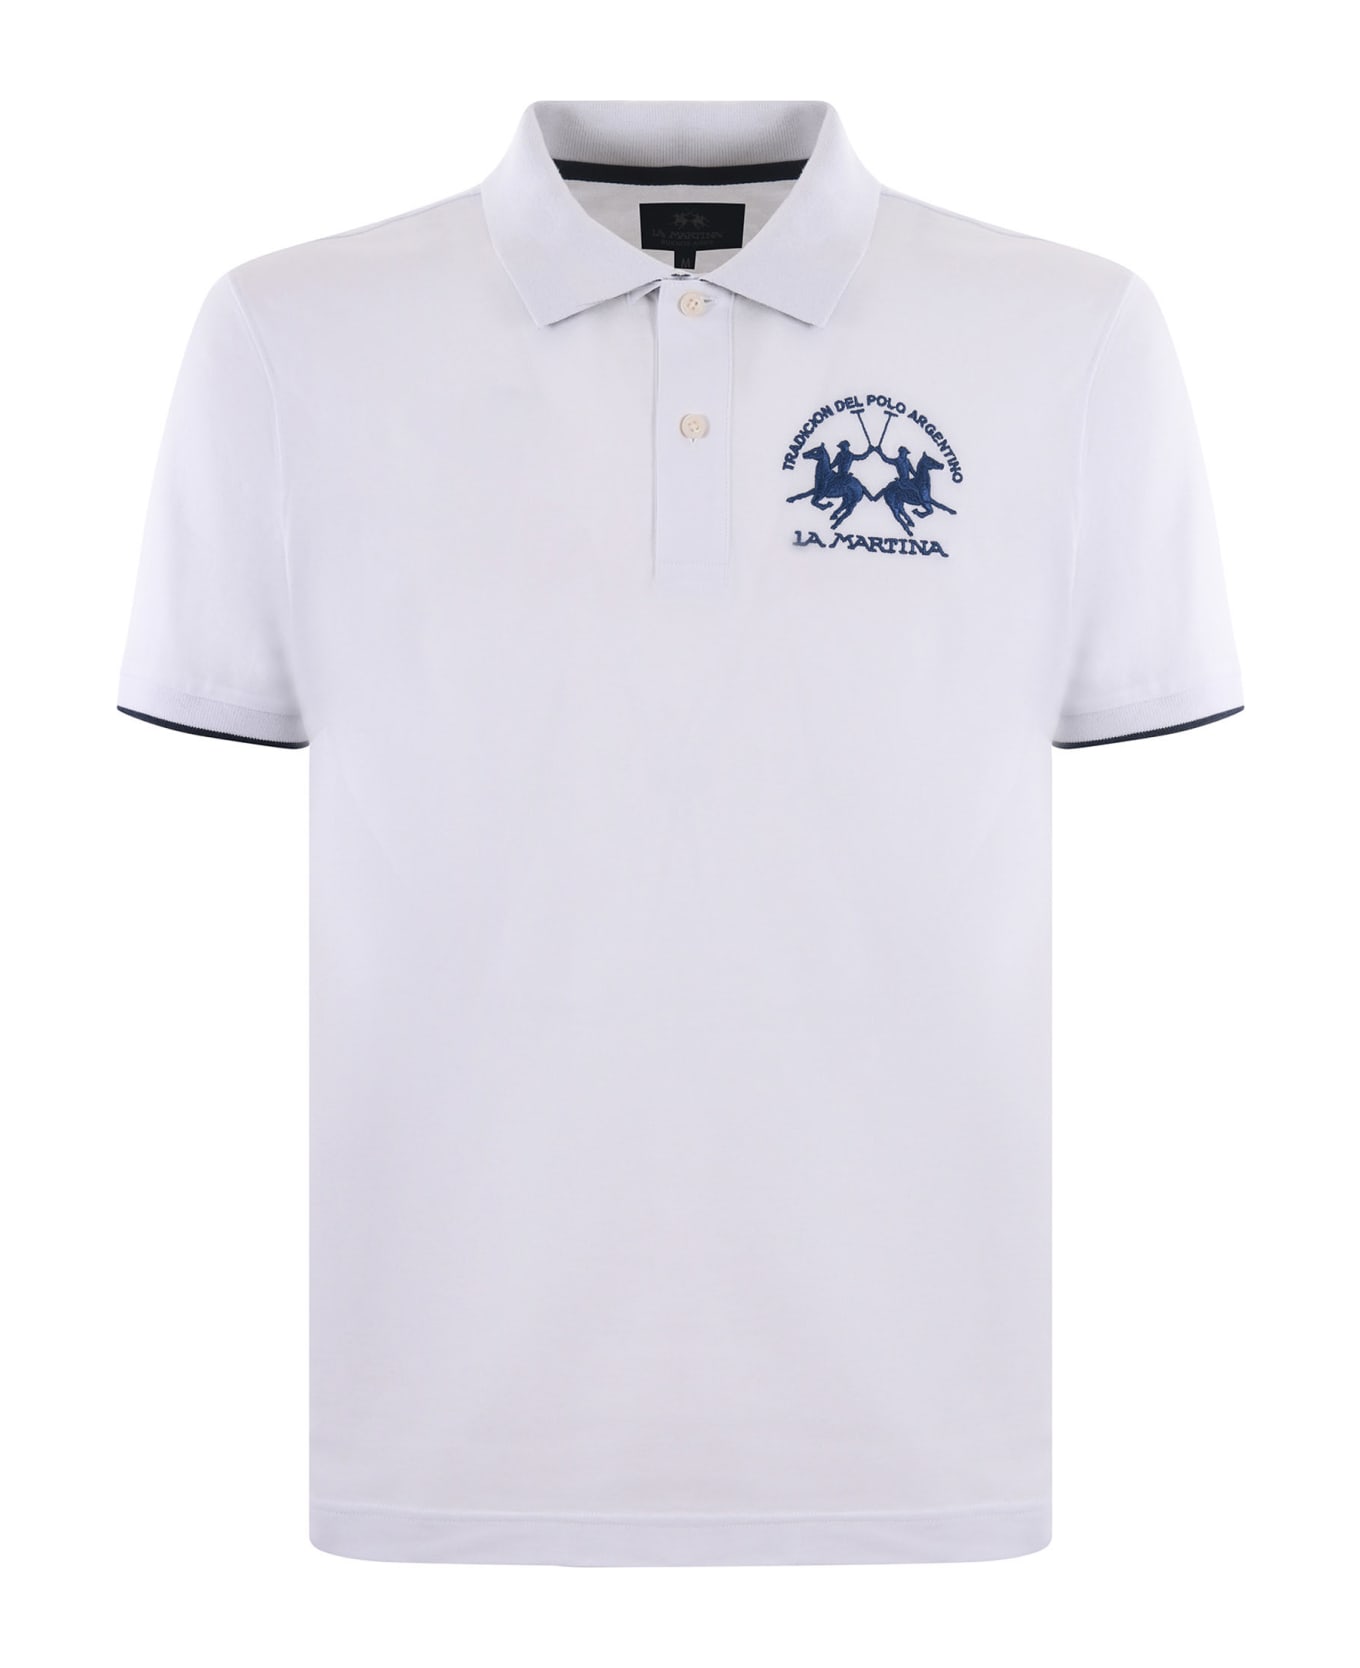 La Martina Polo Shirt - Bianco ポロシャツ